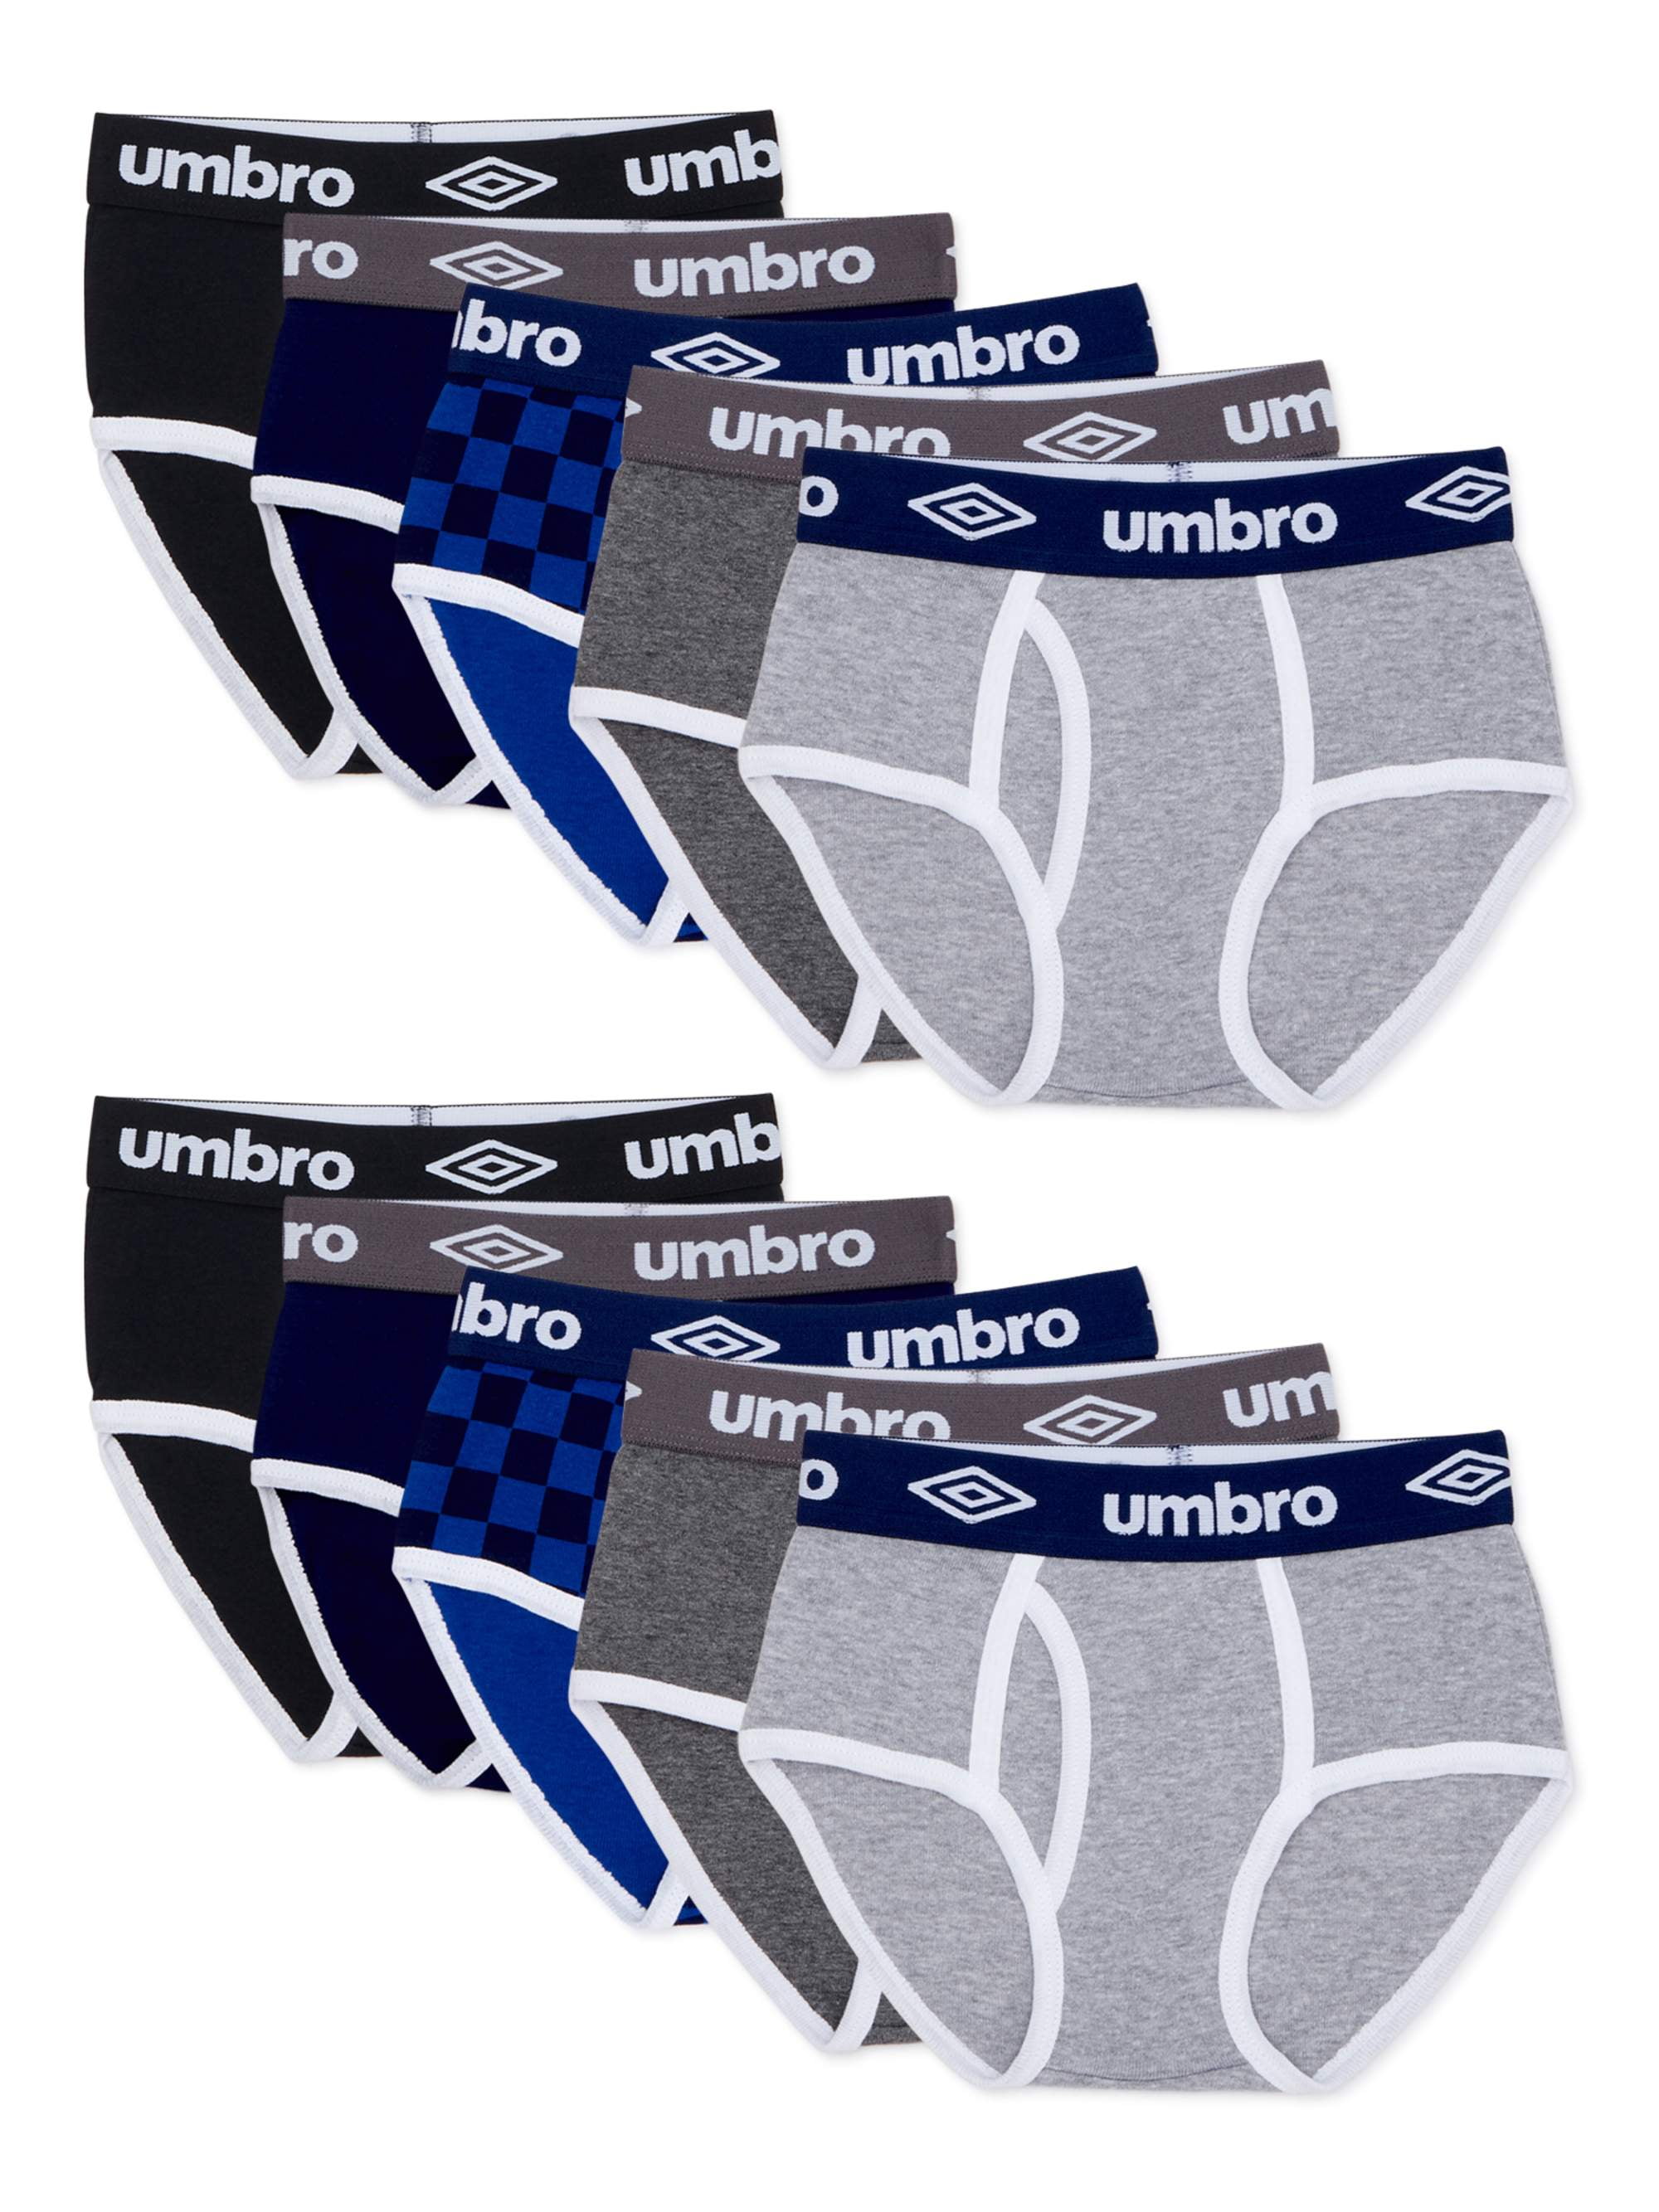 Umbro - Umbro Boys Underwear, 10 Pack Cotton Briefs Sizes 4-16 ...